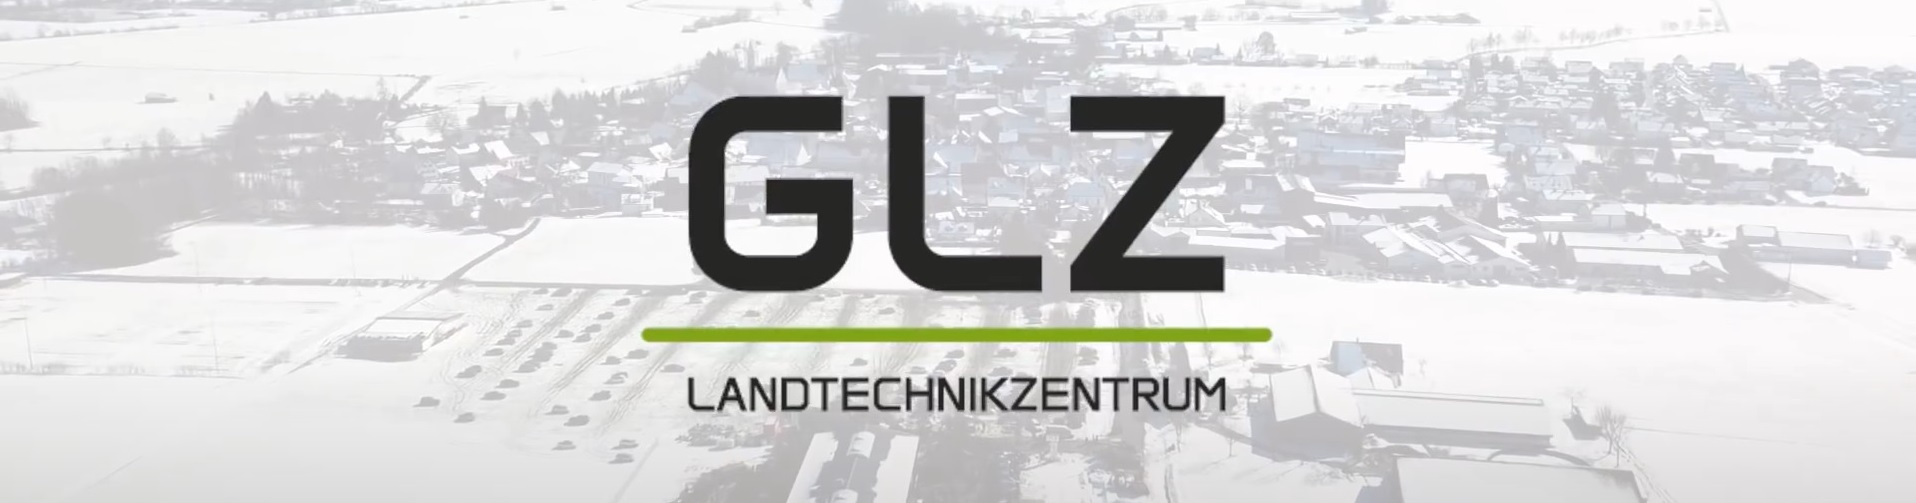 glz logo video startbildschirm